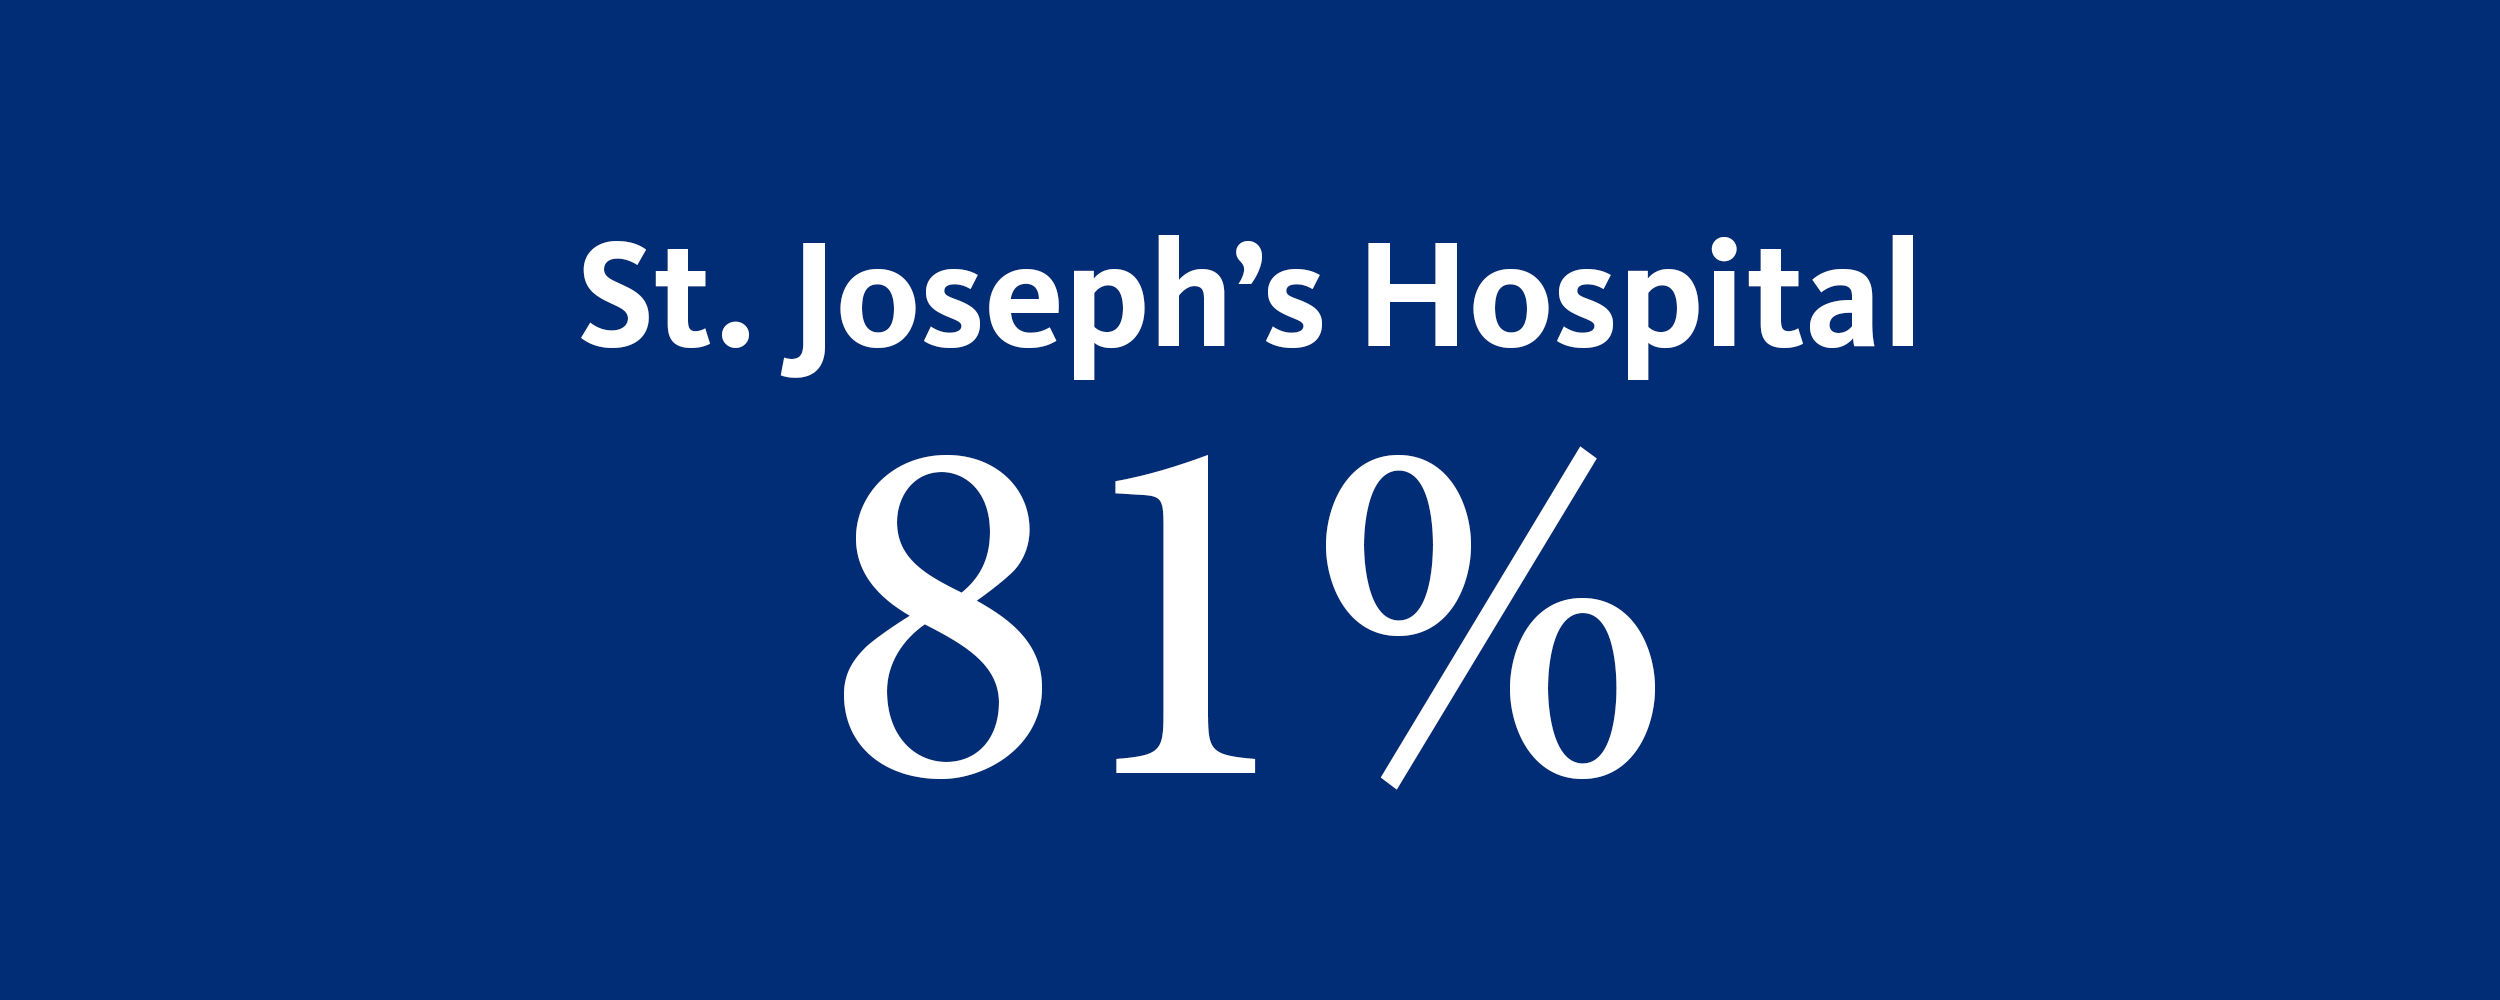 St. Joseph's Hospital overall recommendation